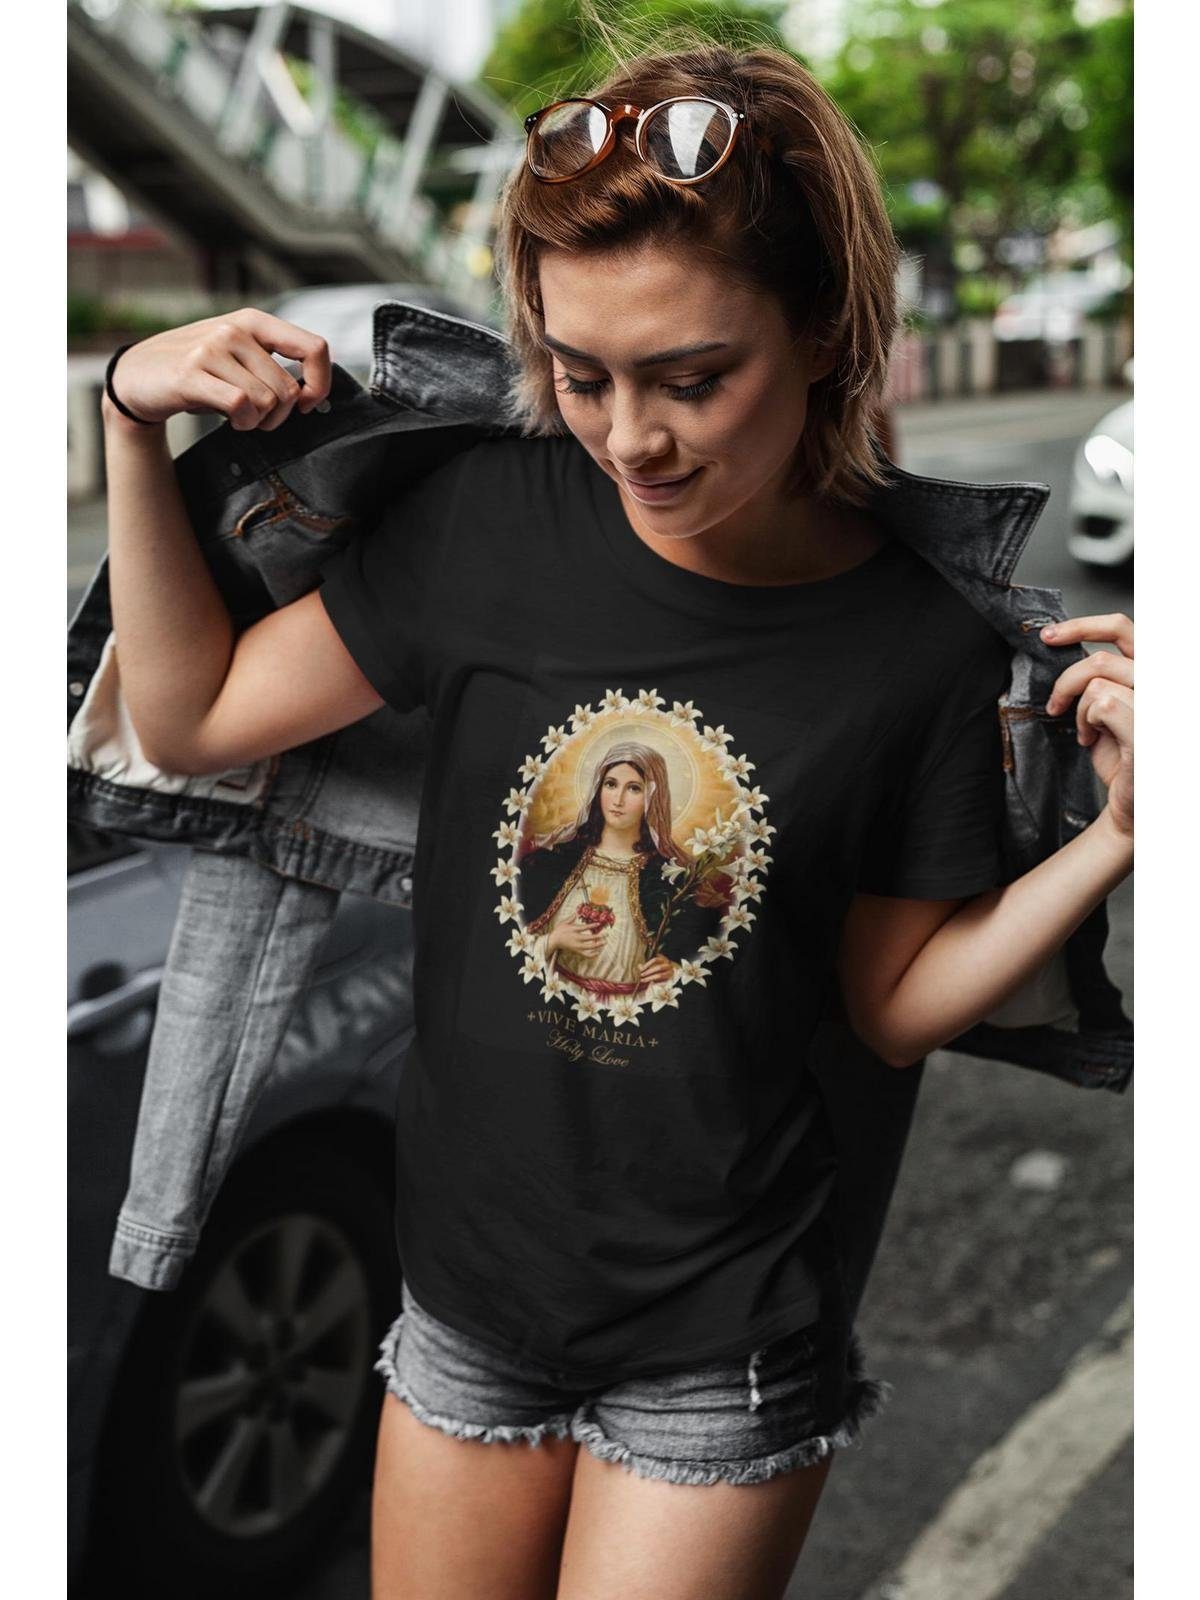 Vive Maria T-Shirt Holy Love schwarz